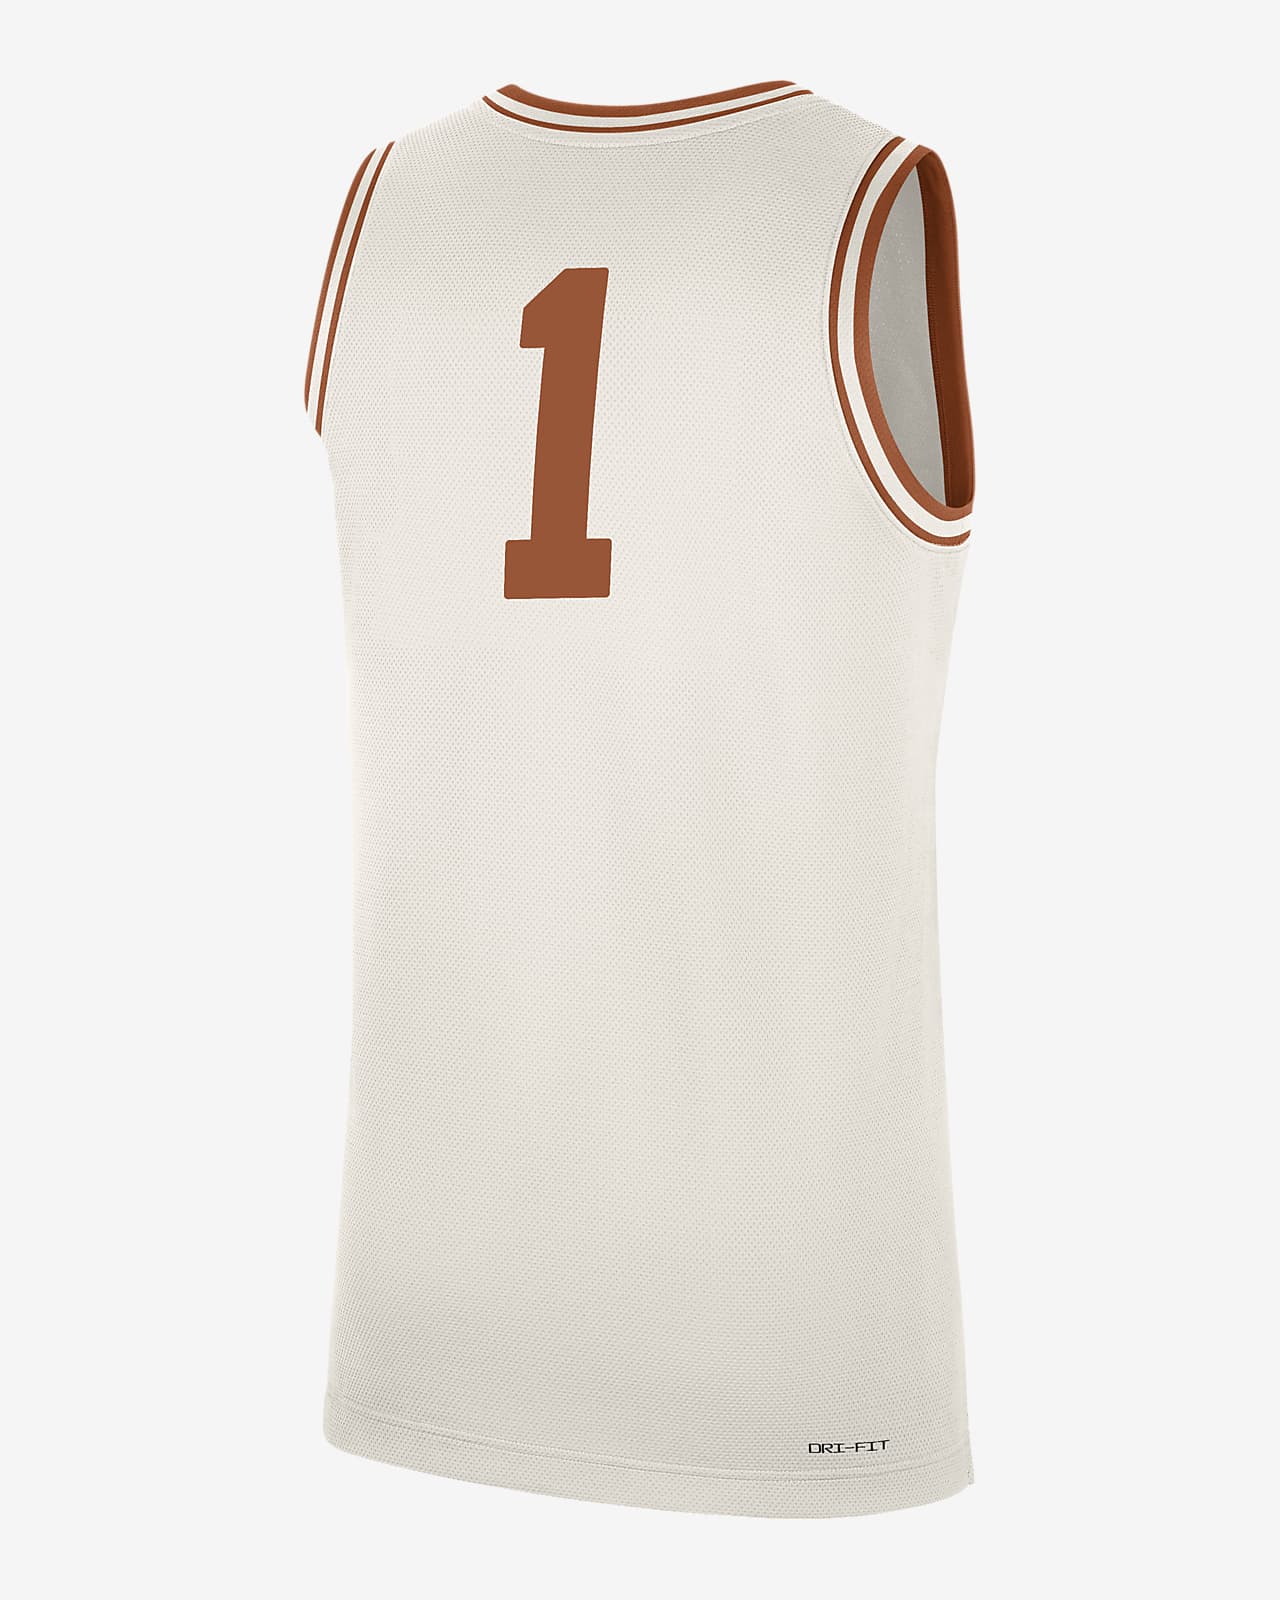 Nike #35 Texas Longhorns Retro Replica Basketball Jersey At